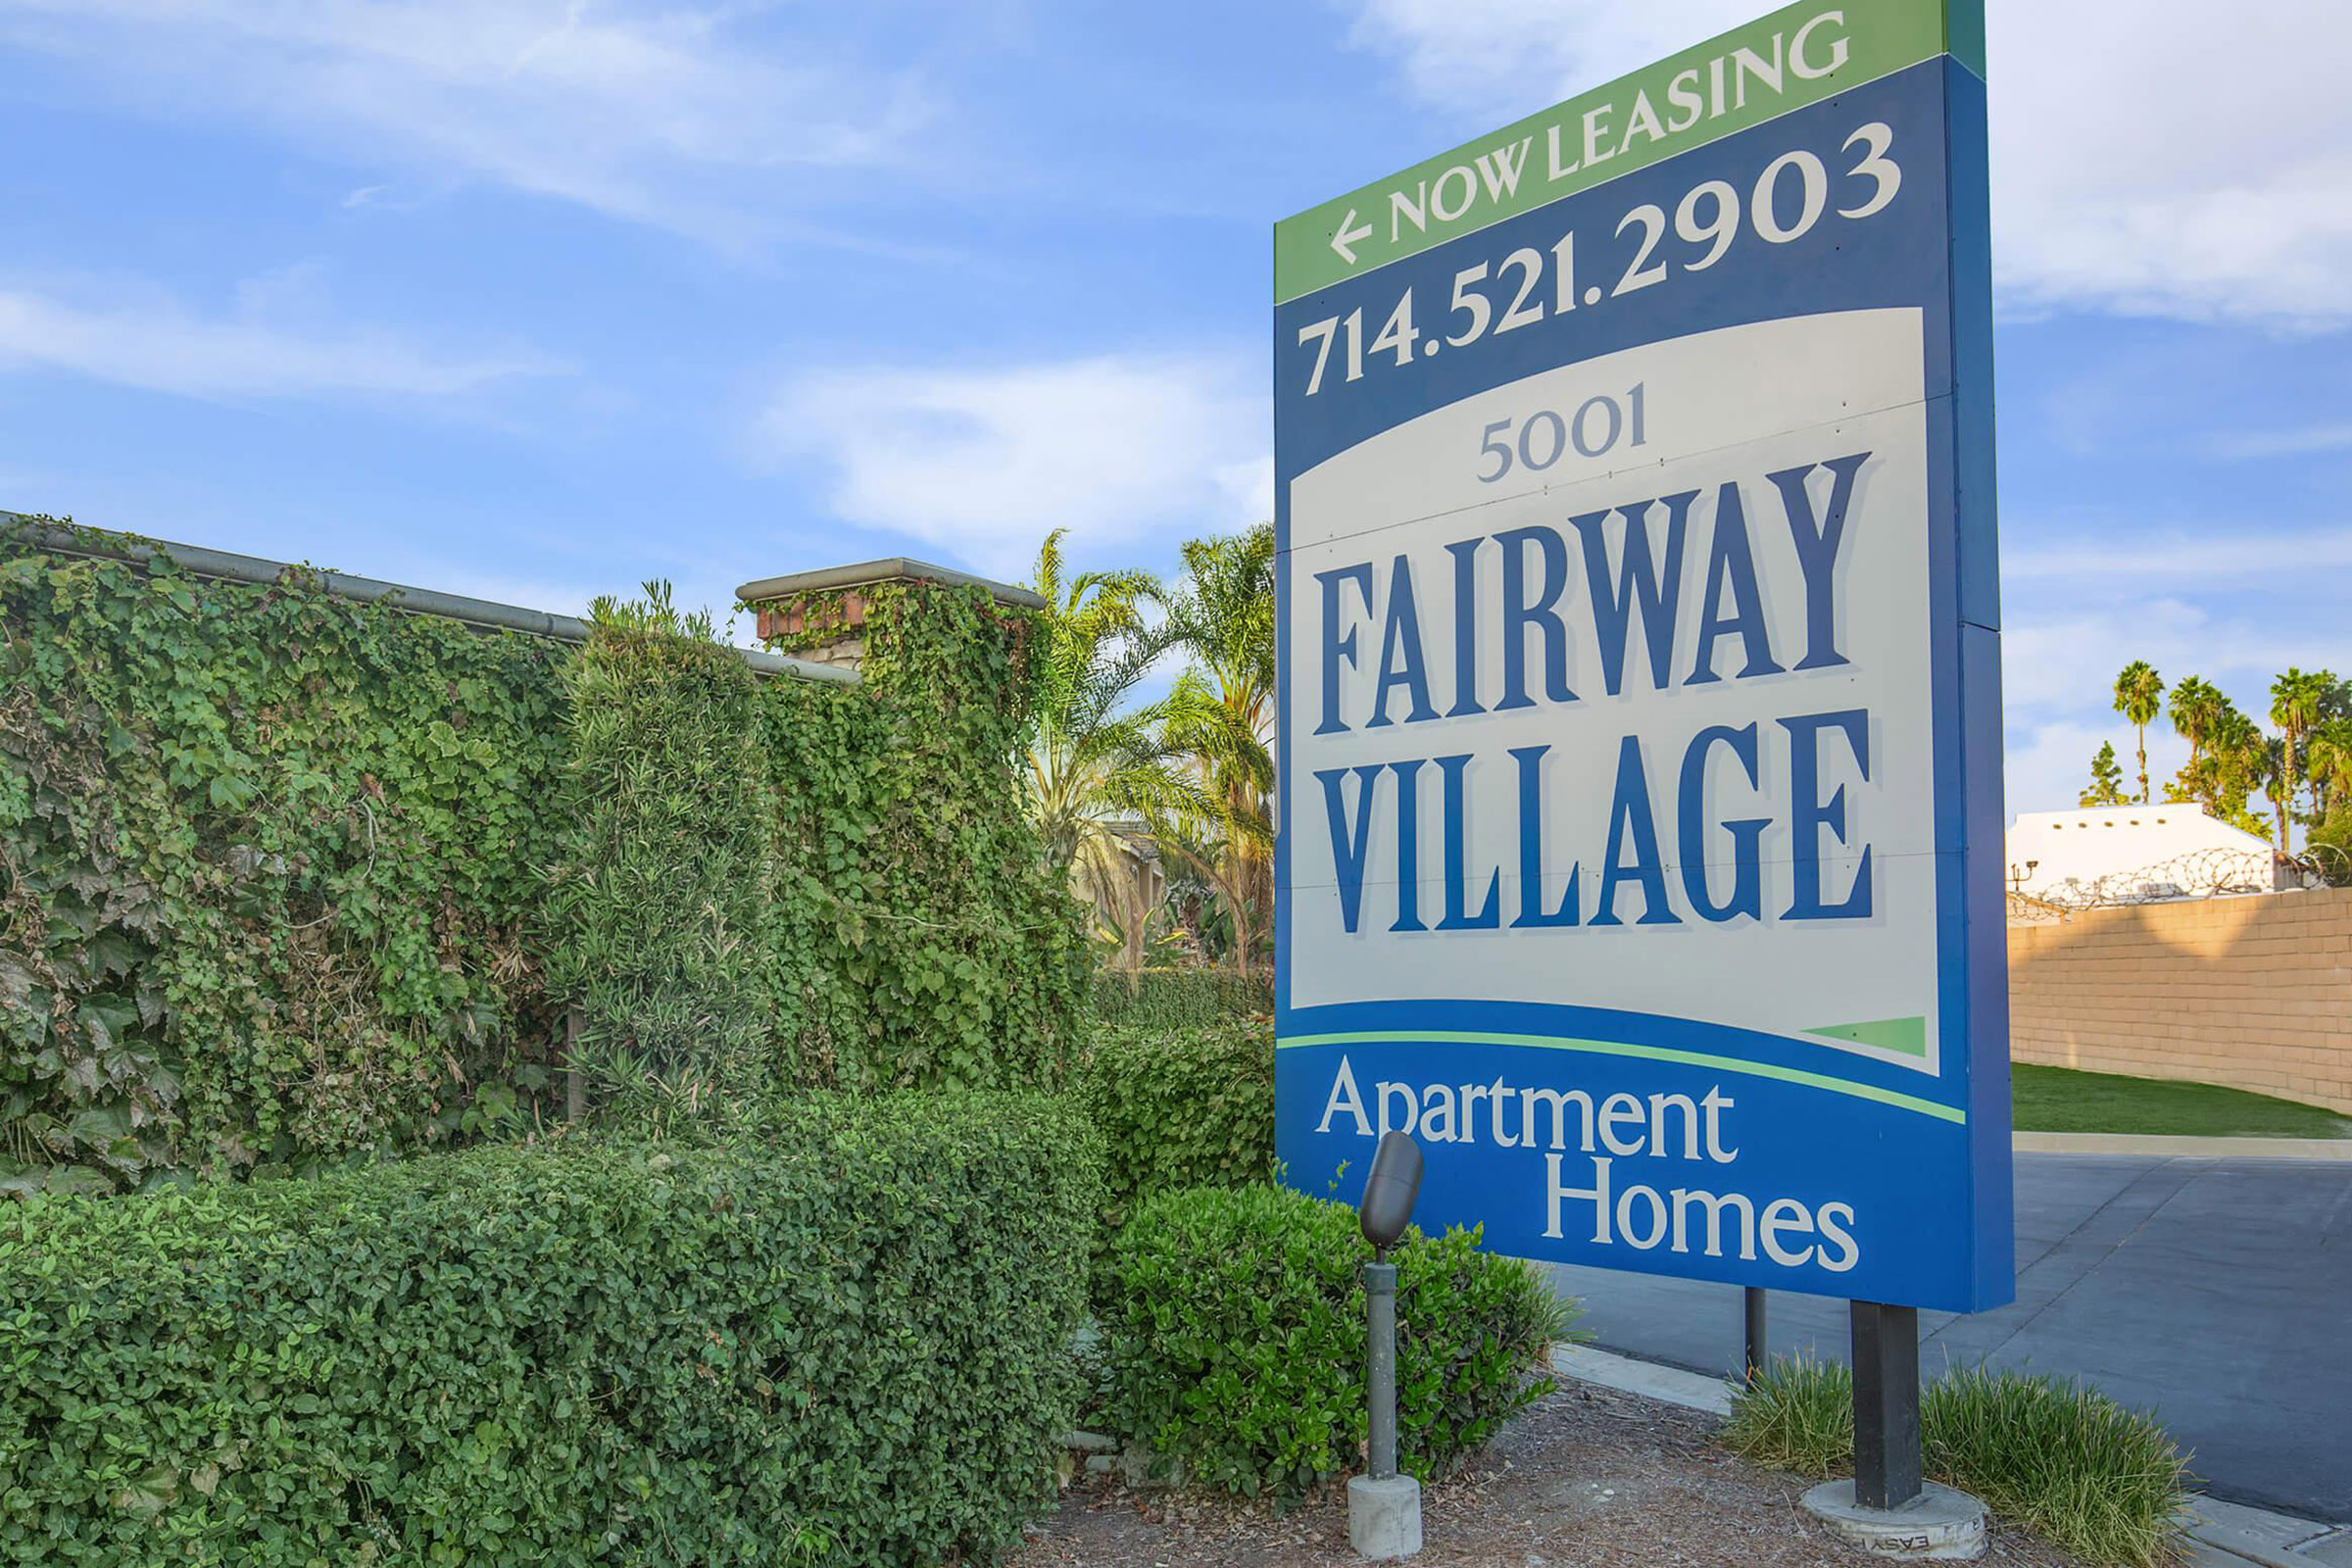 Fairway Village Apartment Homes monument sign